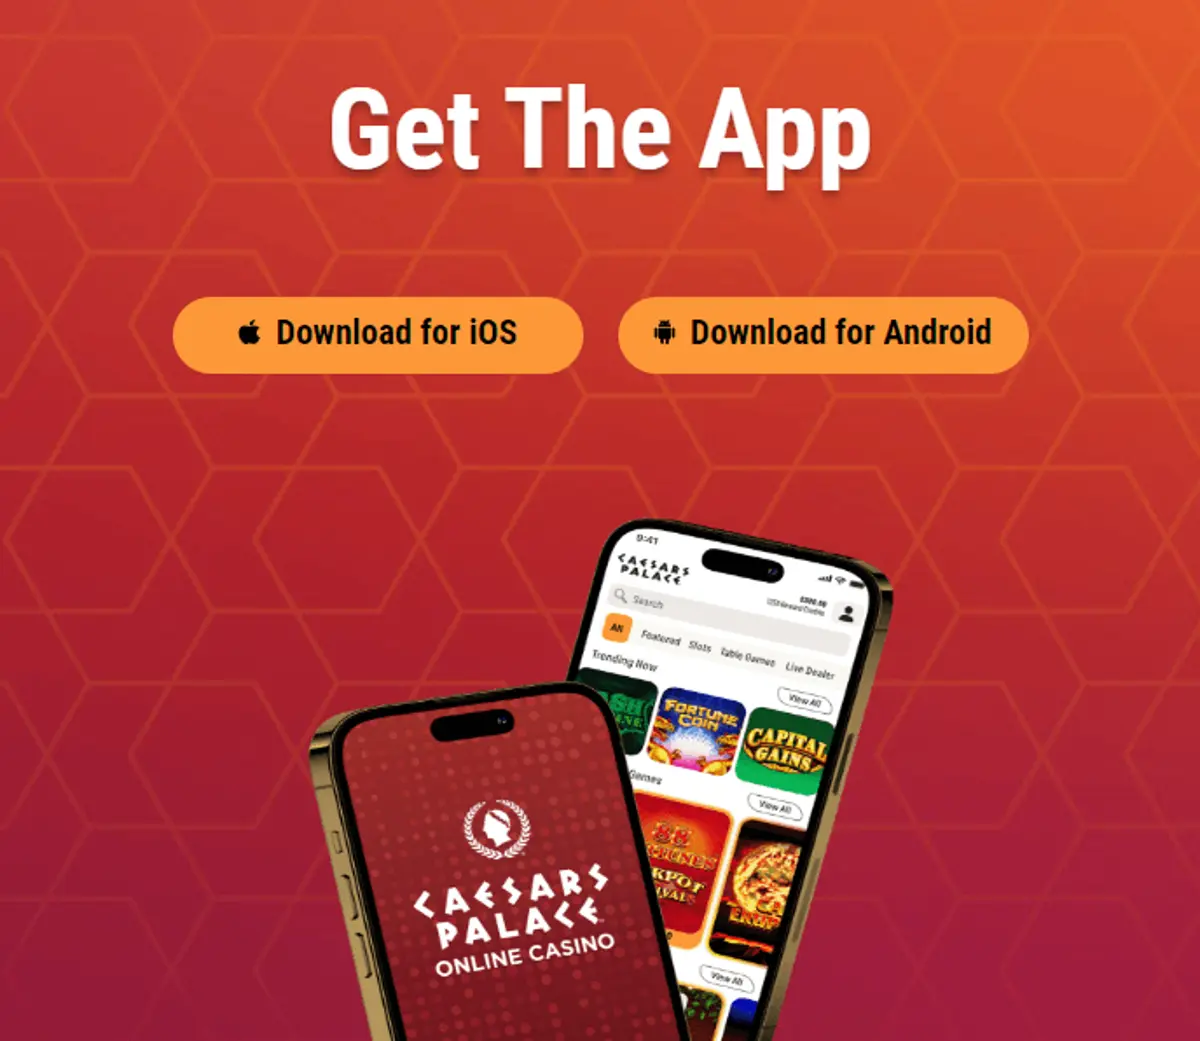 Caesar's Palace mobile app